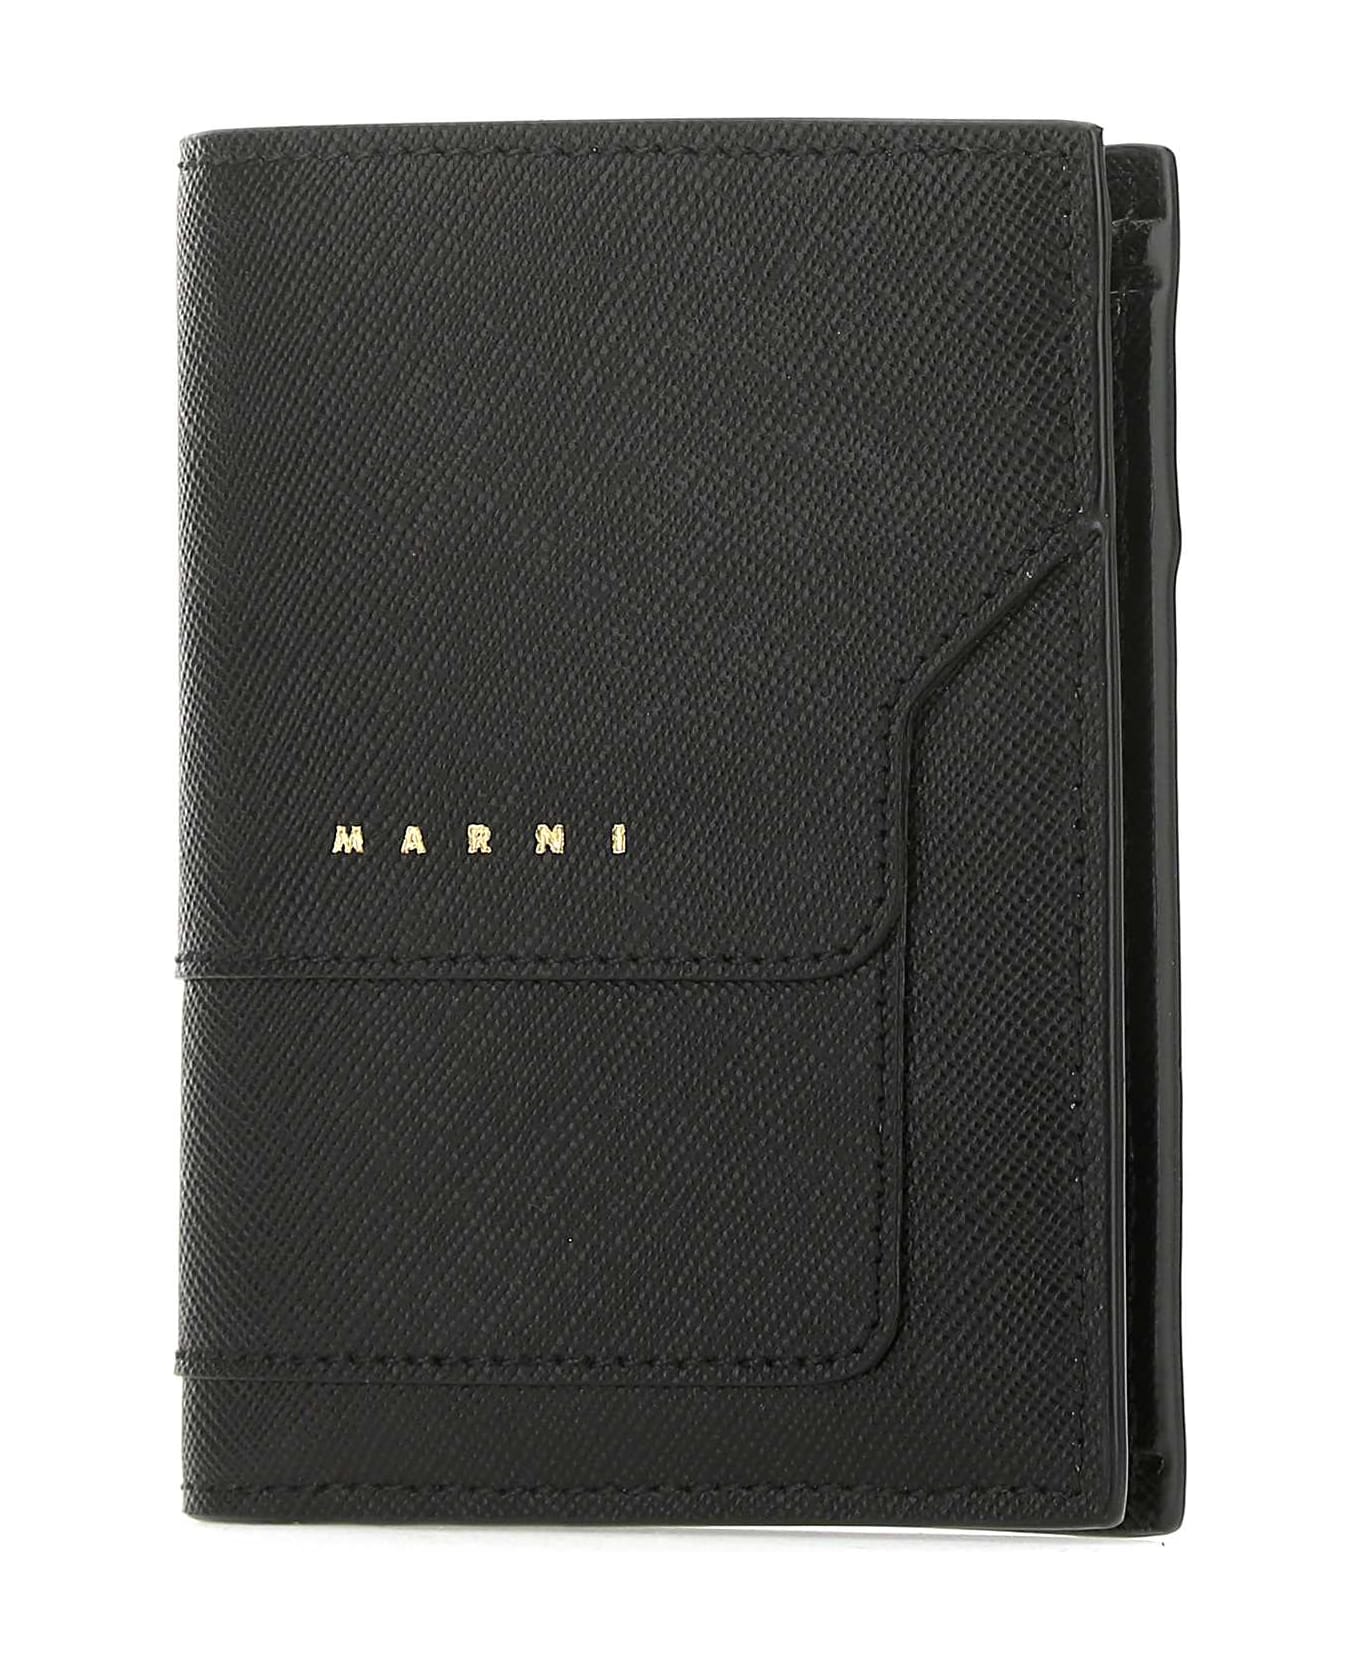 Marni Black Leather Wallet - Z360N 財布